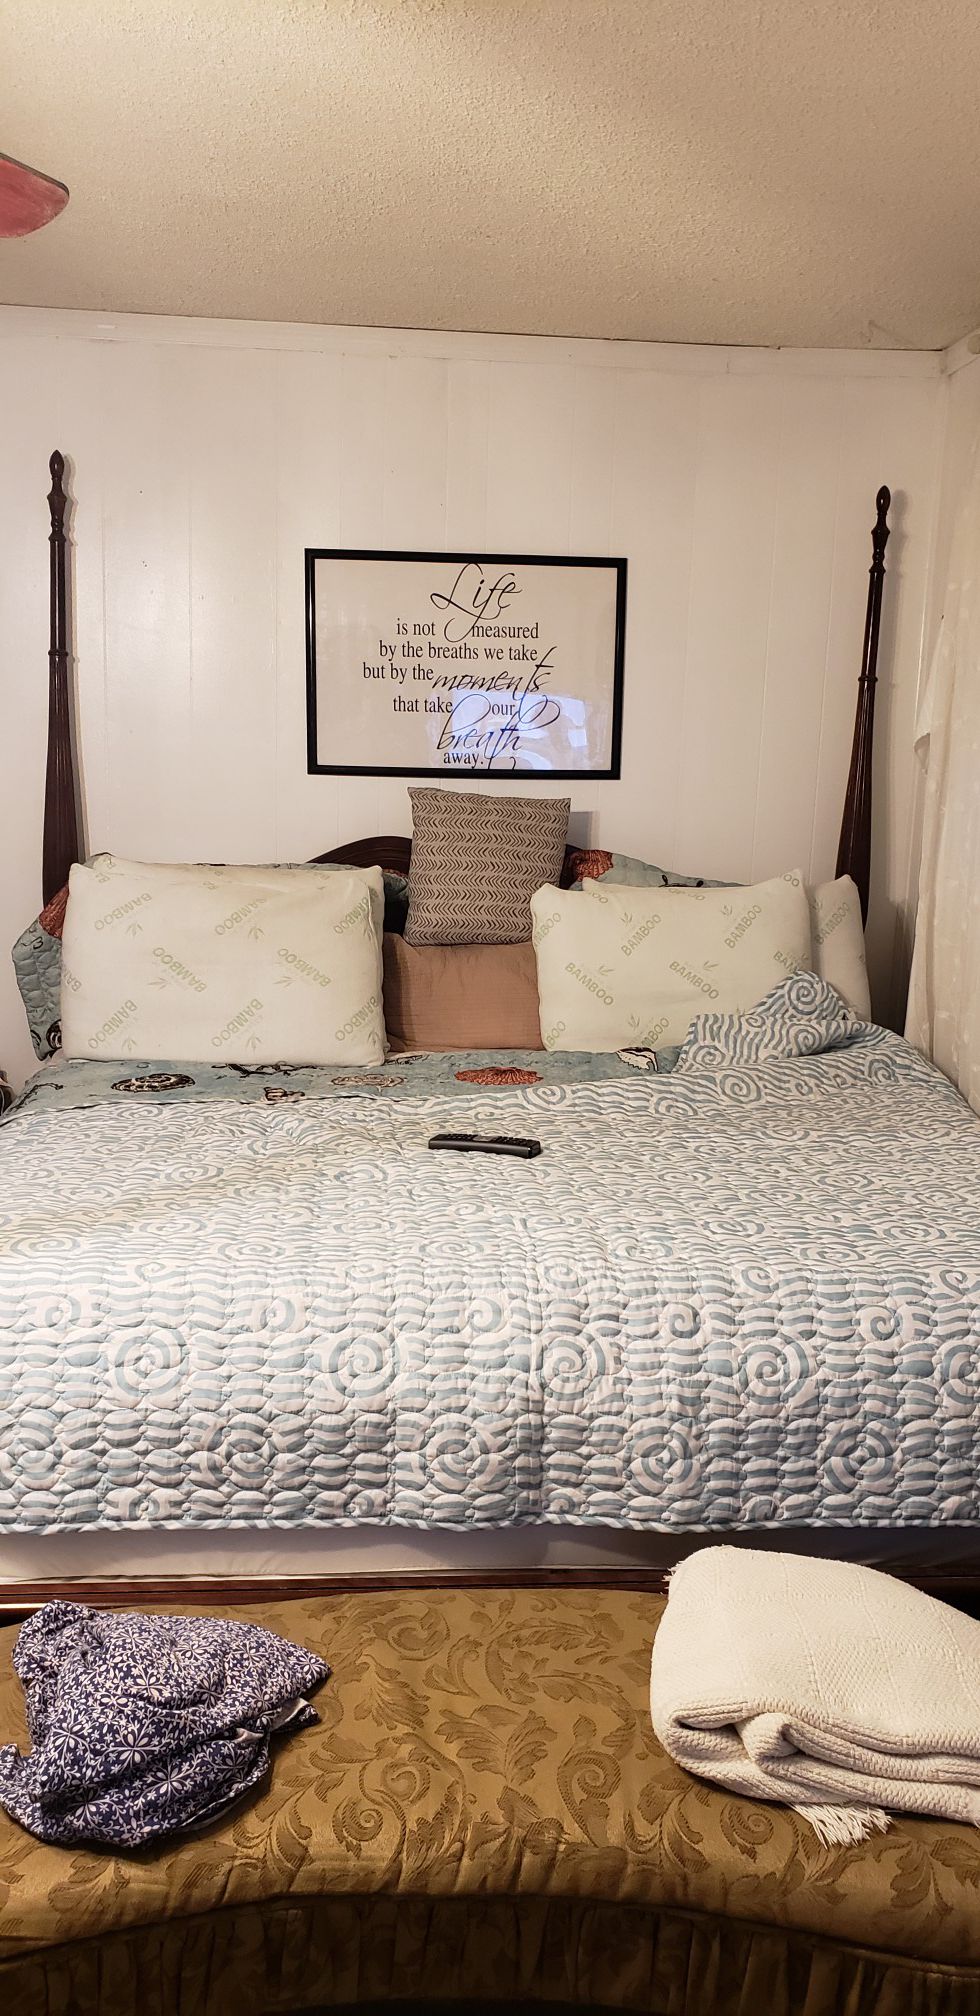 Kingsize bedroom set, mattress not included